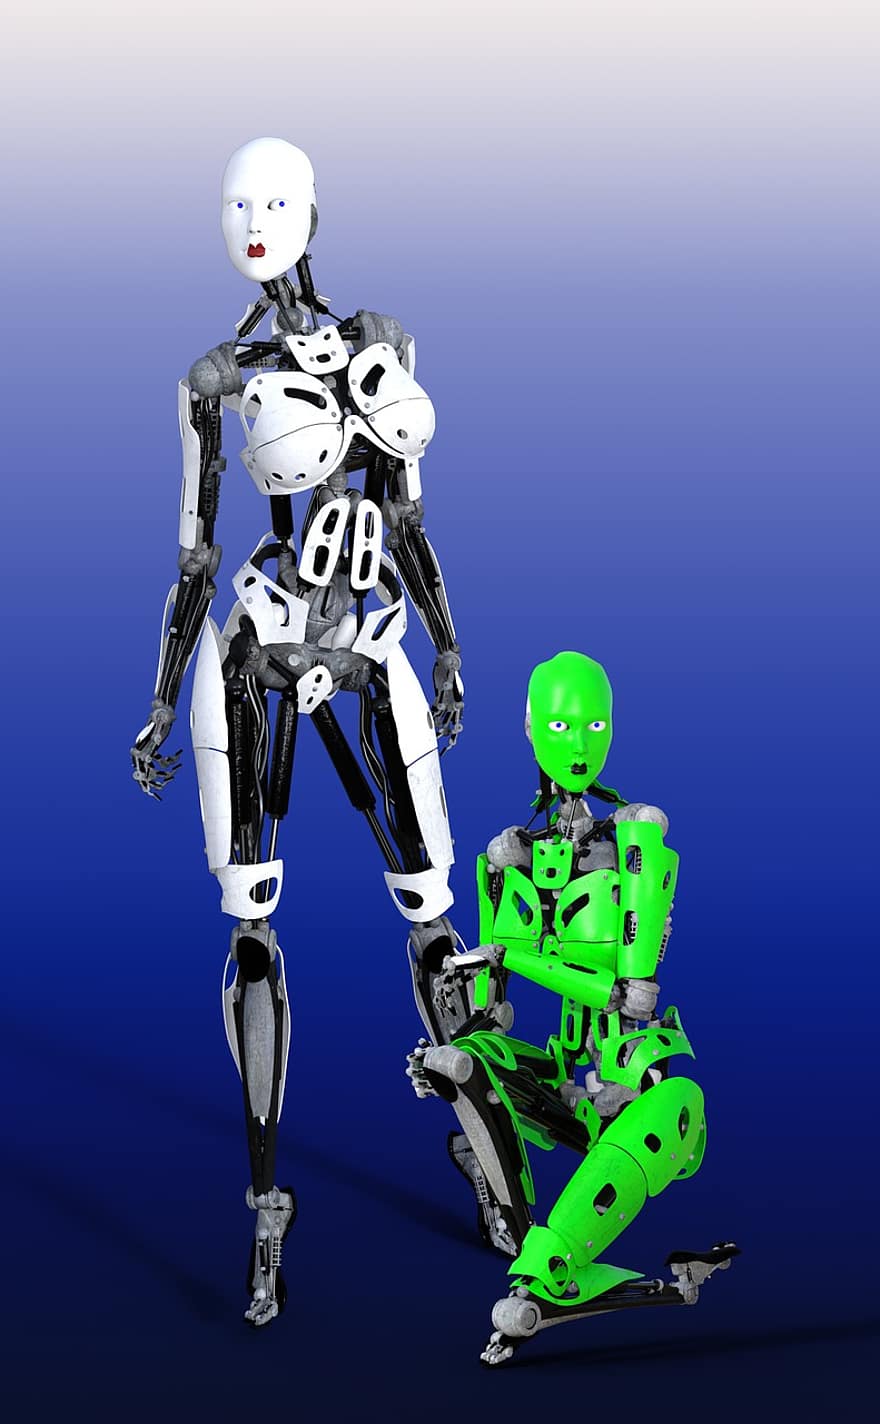 Robot, Cyborg, Artificial, Bionic, Intelligence, Automated, Ai